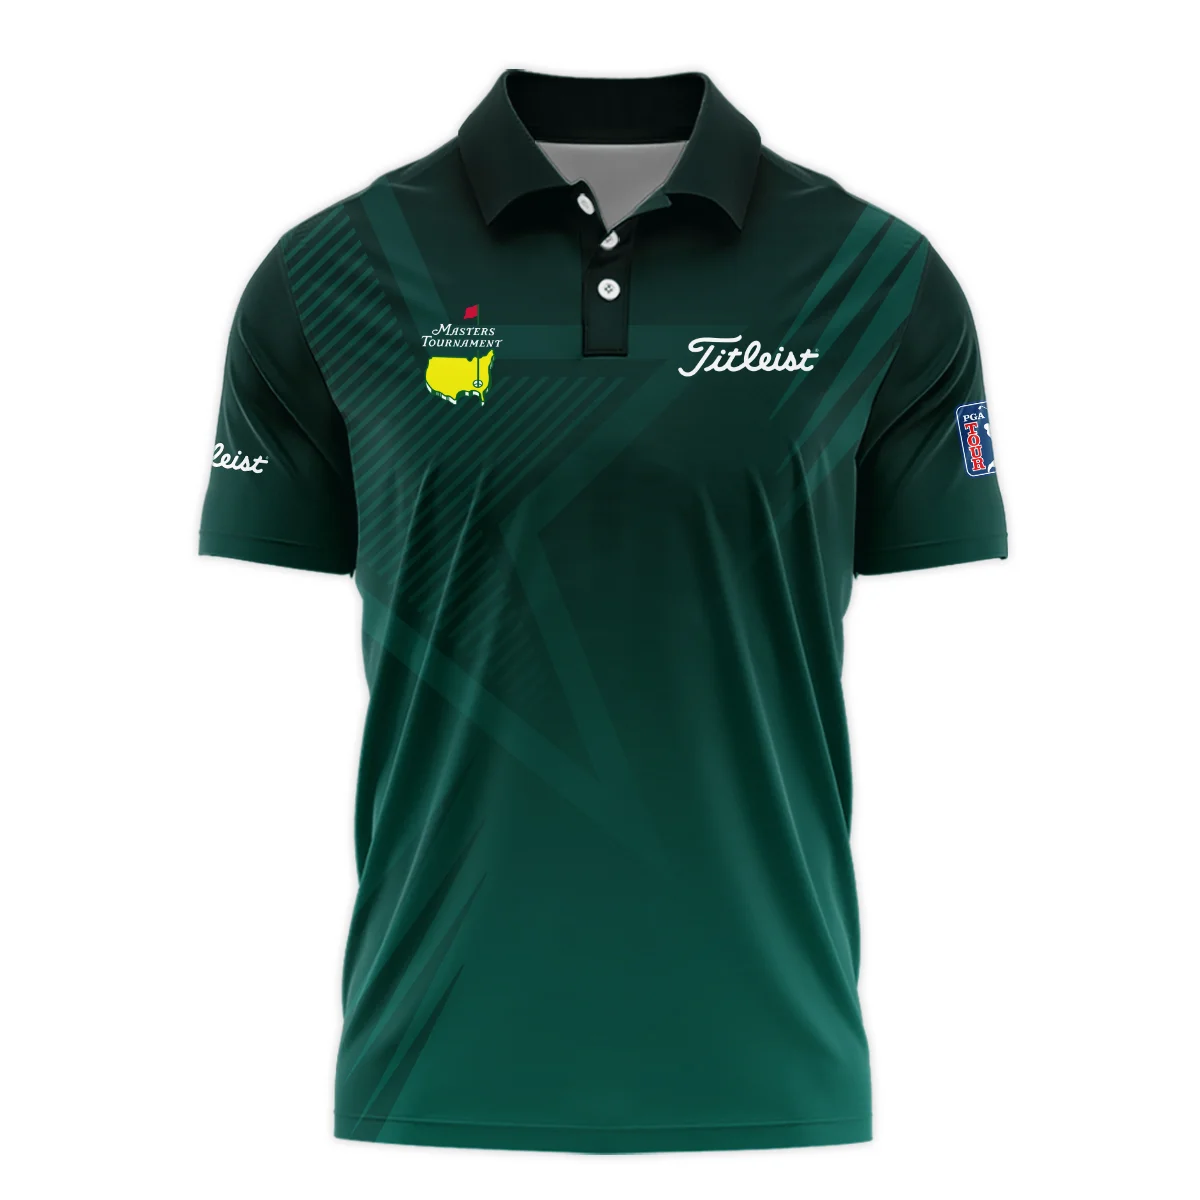 Sports Titleist Masters Tournament Bomber Jacket Star Pattern Dark Green Gradient Golf Bomber Jacket